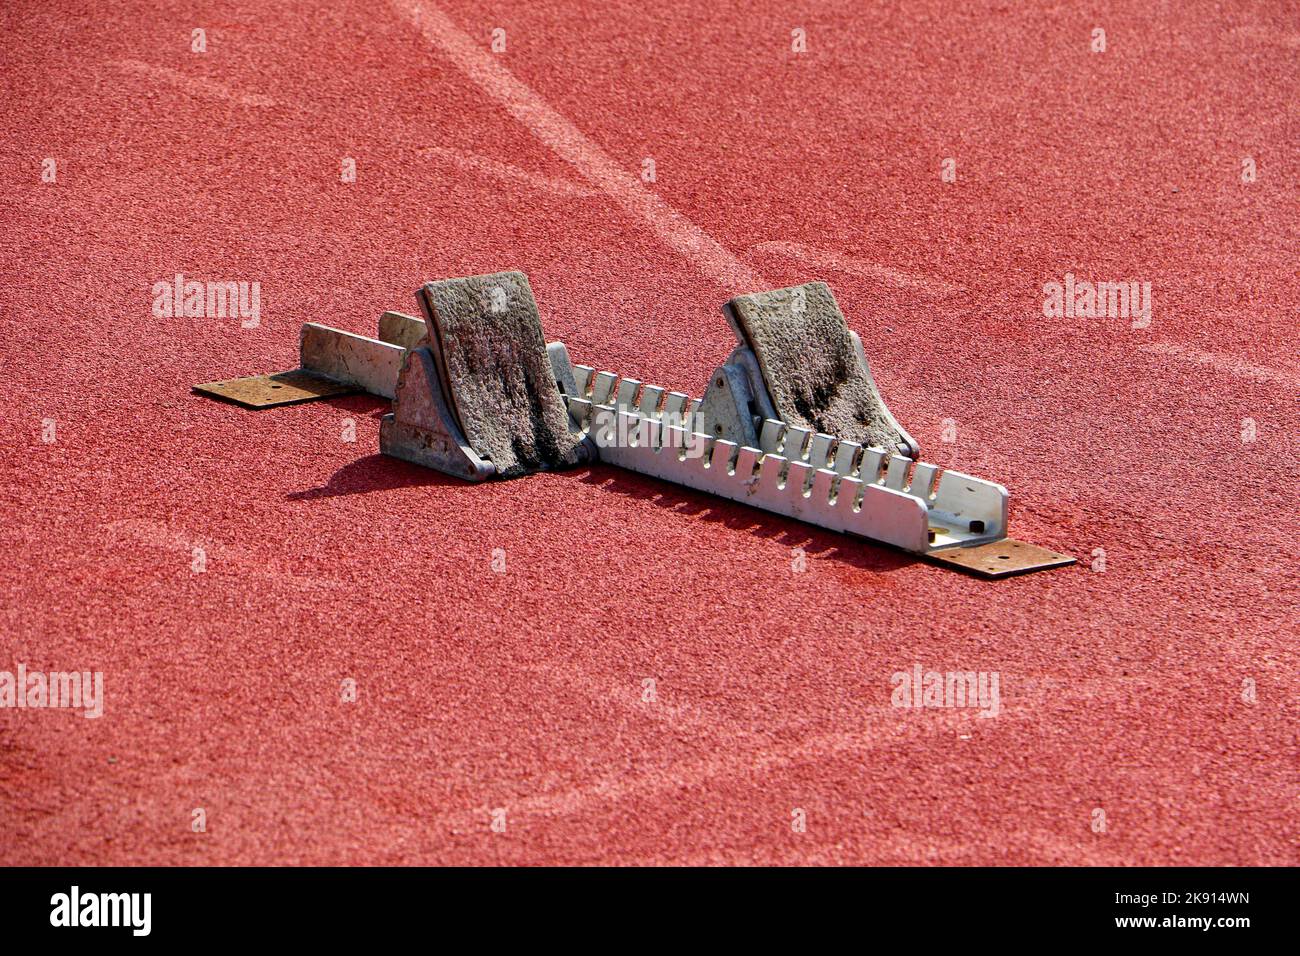 Sprinters starting blocks on athletics track Stock Photo